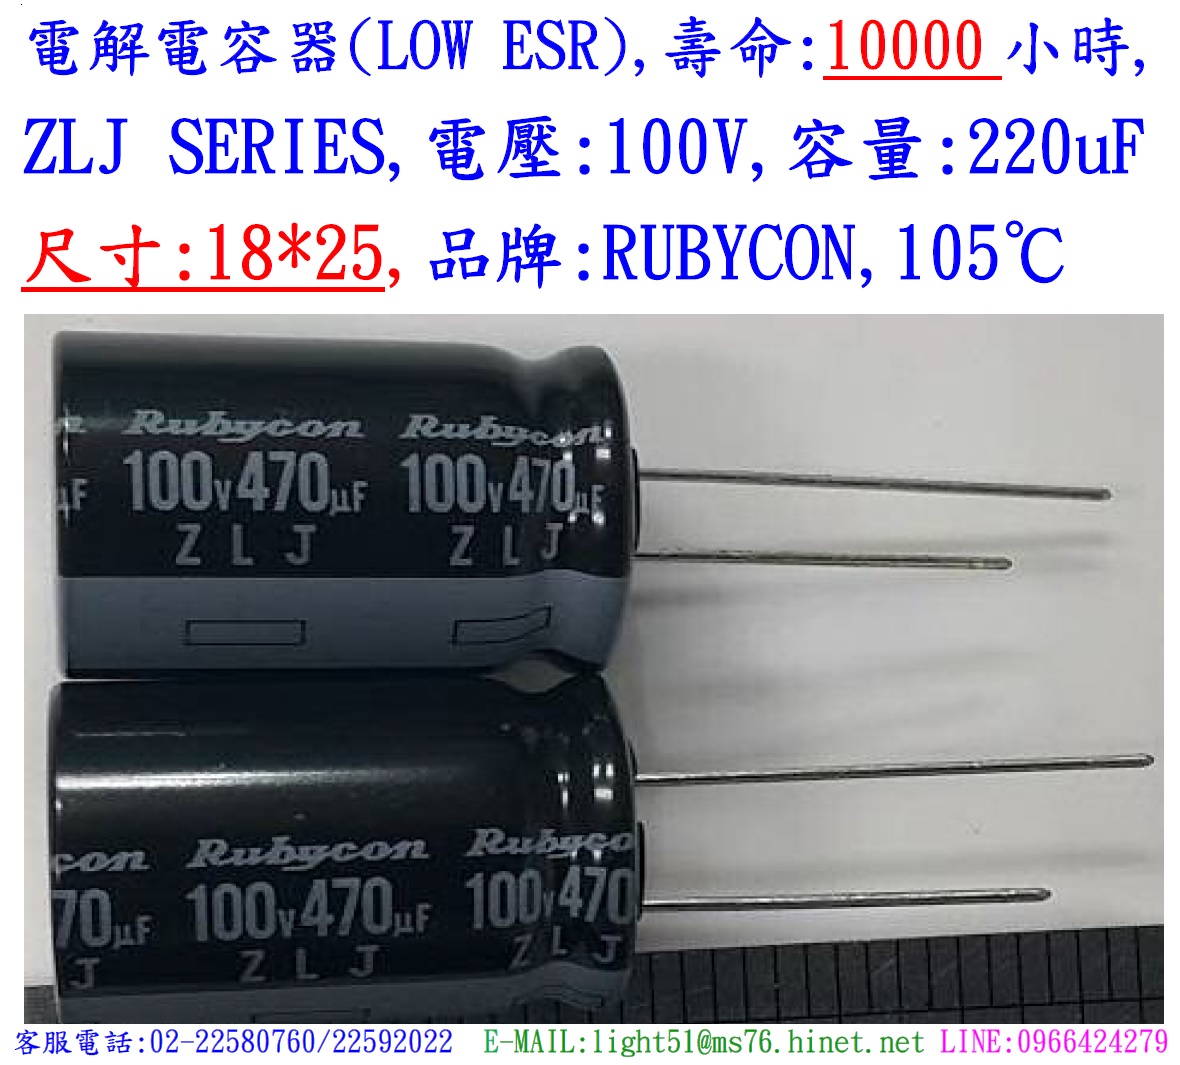 ZLJ,100V,470uF,尺寸:18*25,電解電容器(LOW ESR),壽命:10000小時,Rubycon